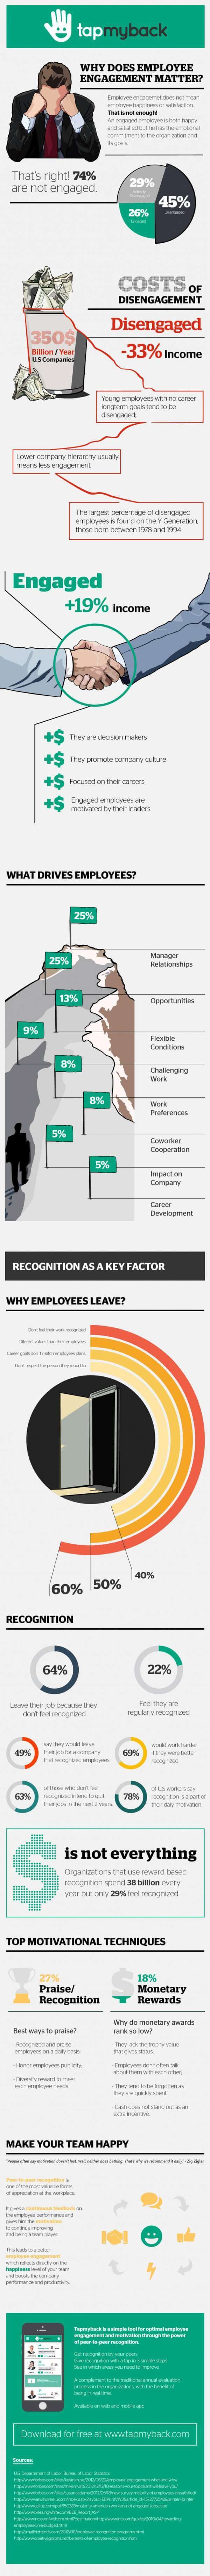 engaged-employees-productivity-infographic